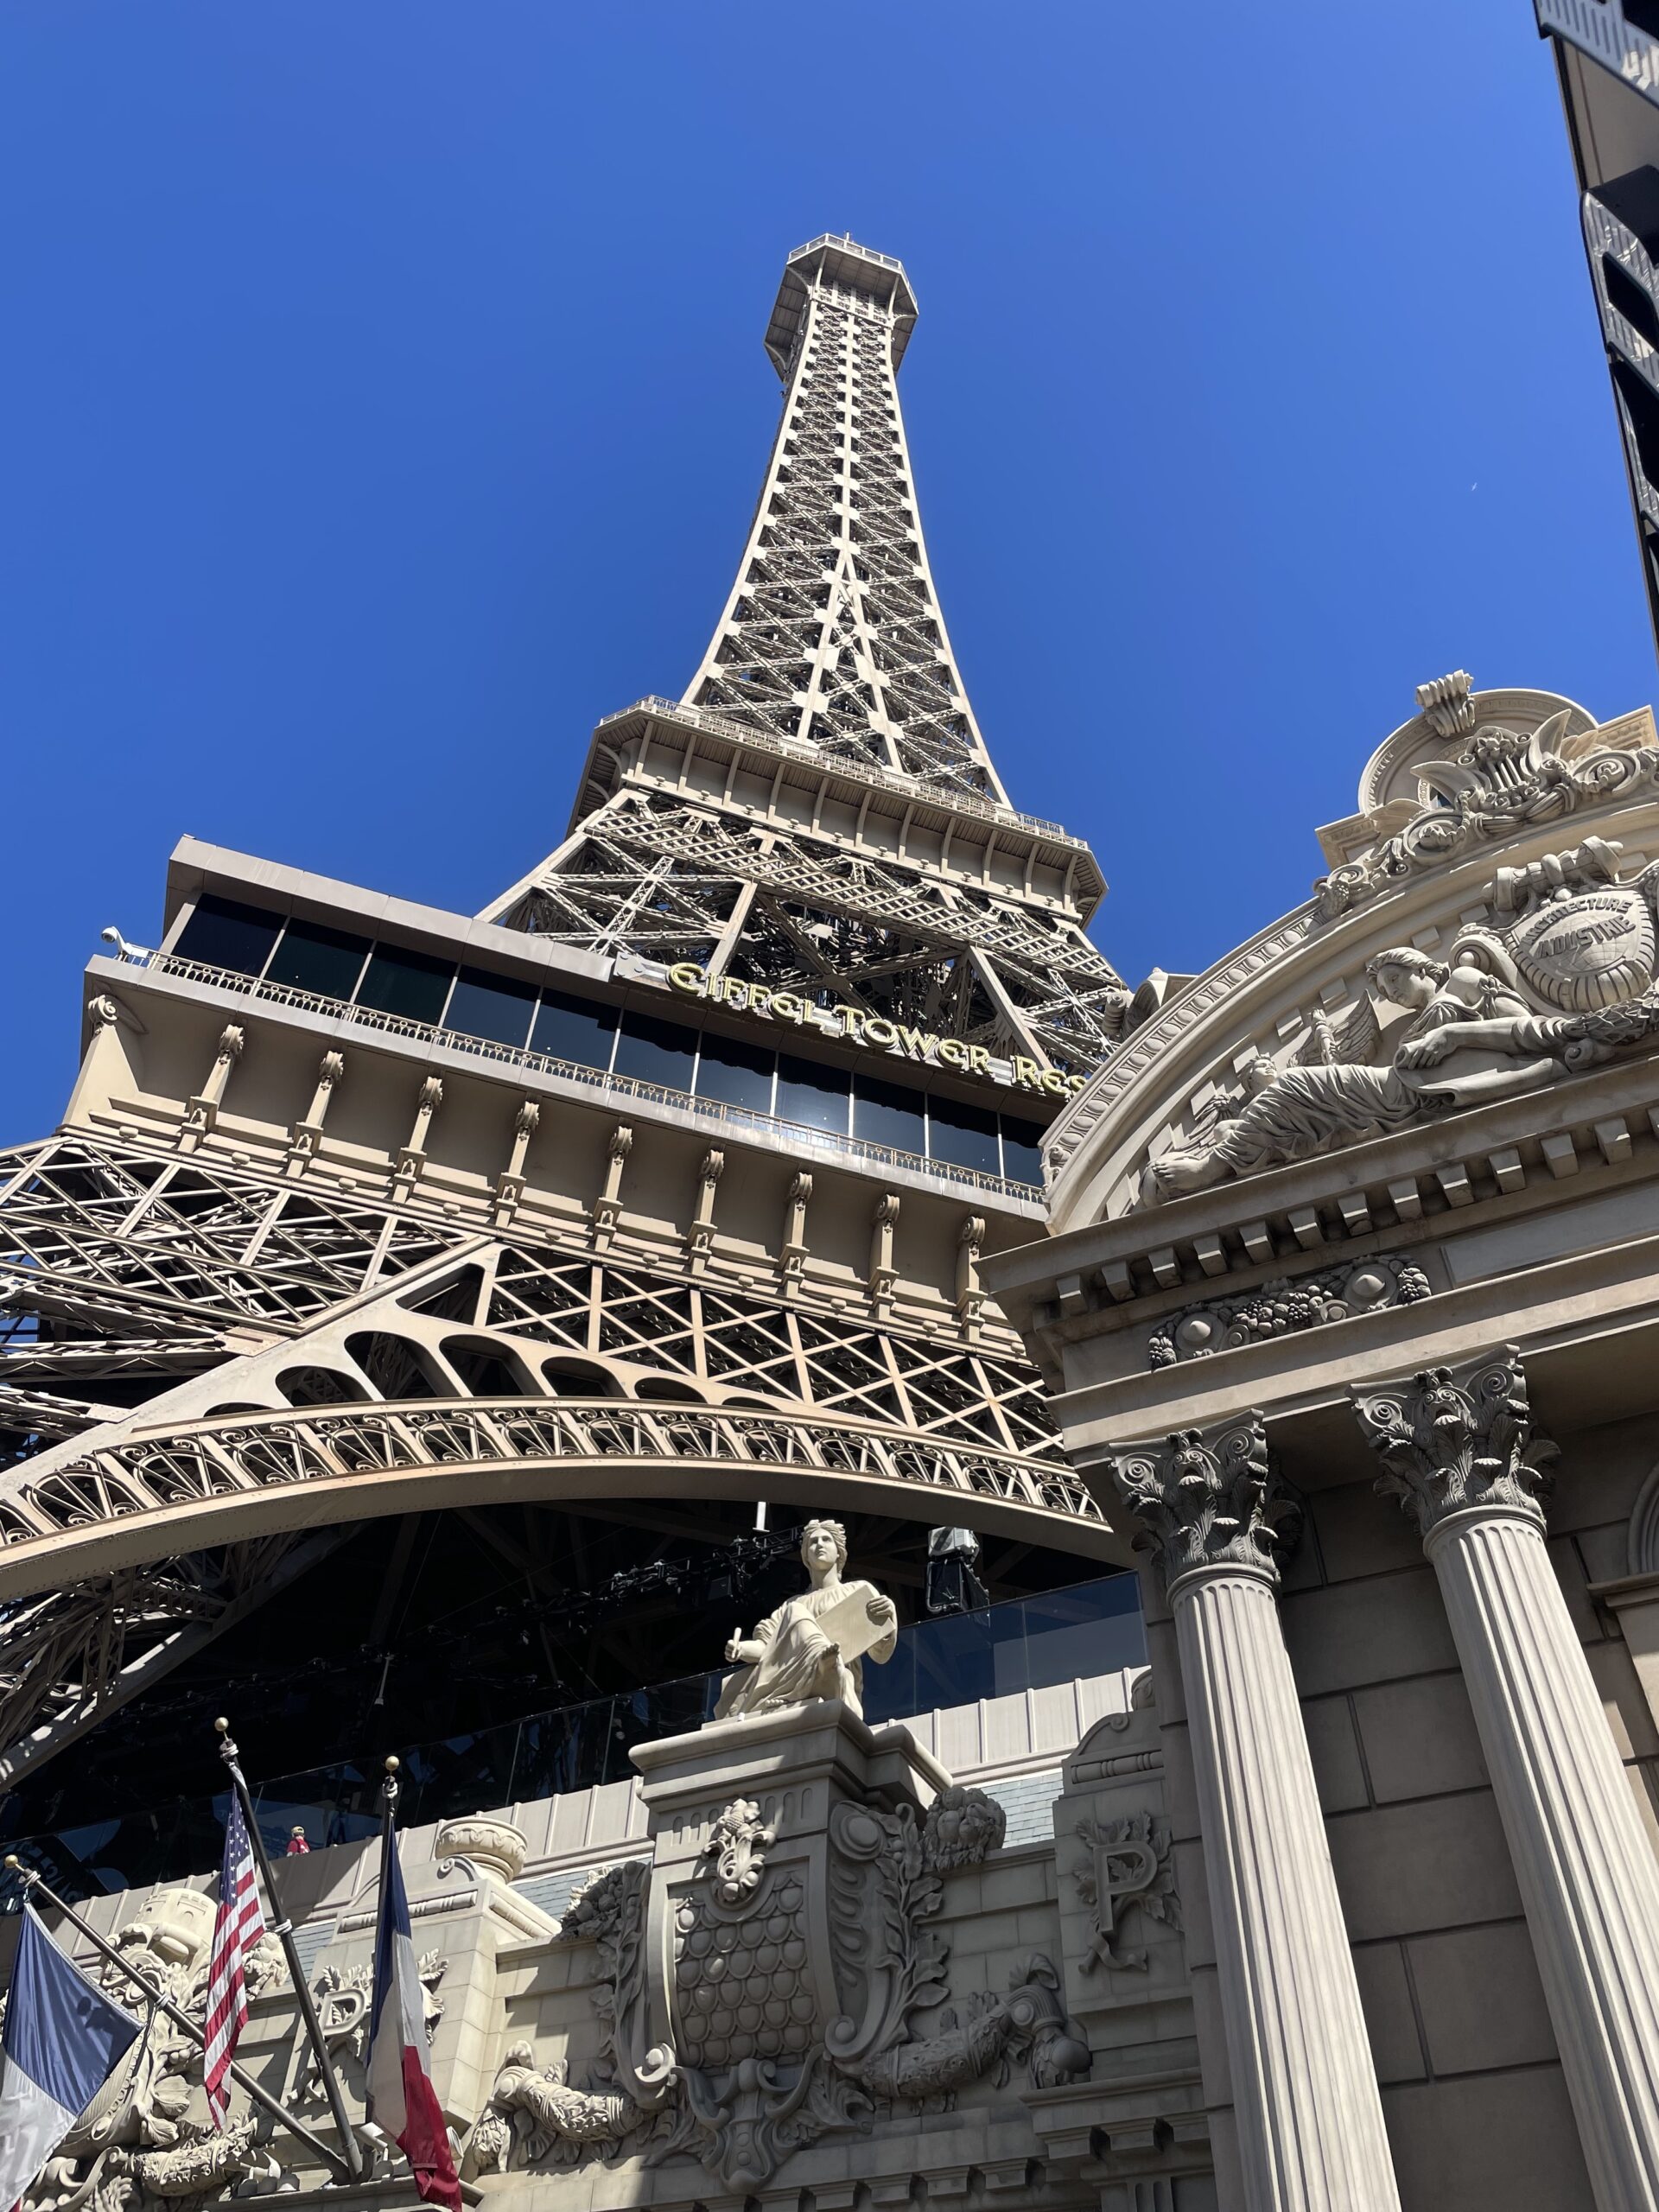 Eiffel Tower Las Vegas Tickets, Viewing Deck Access